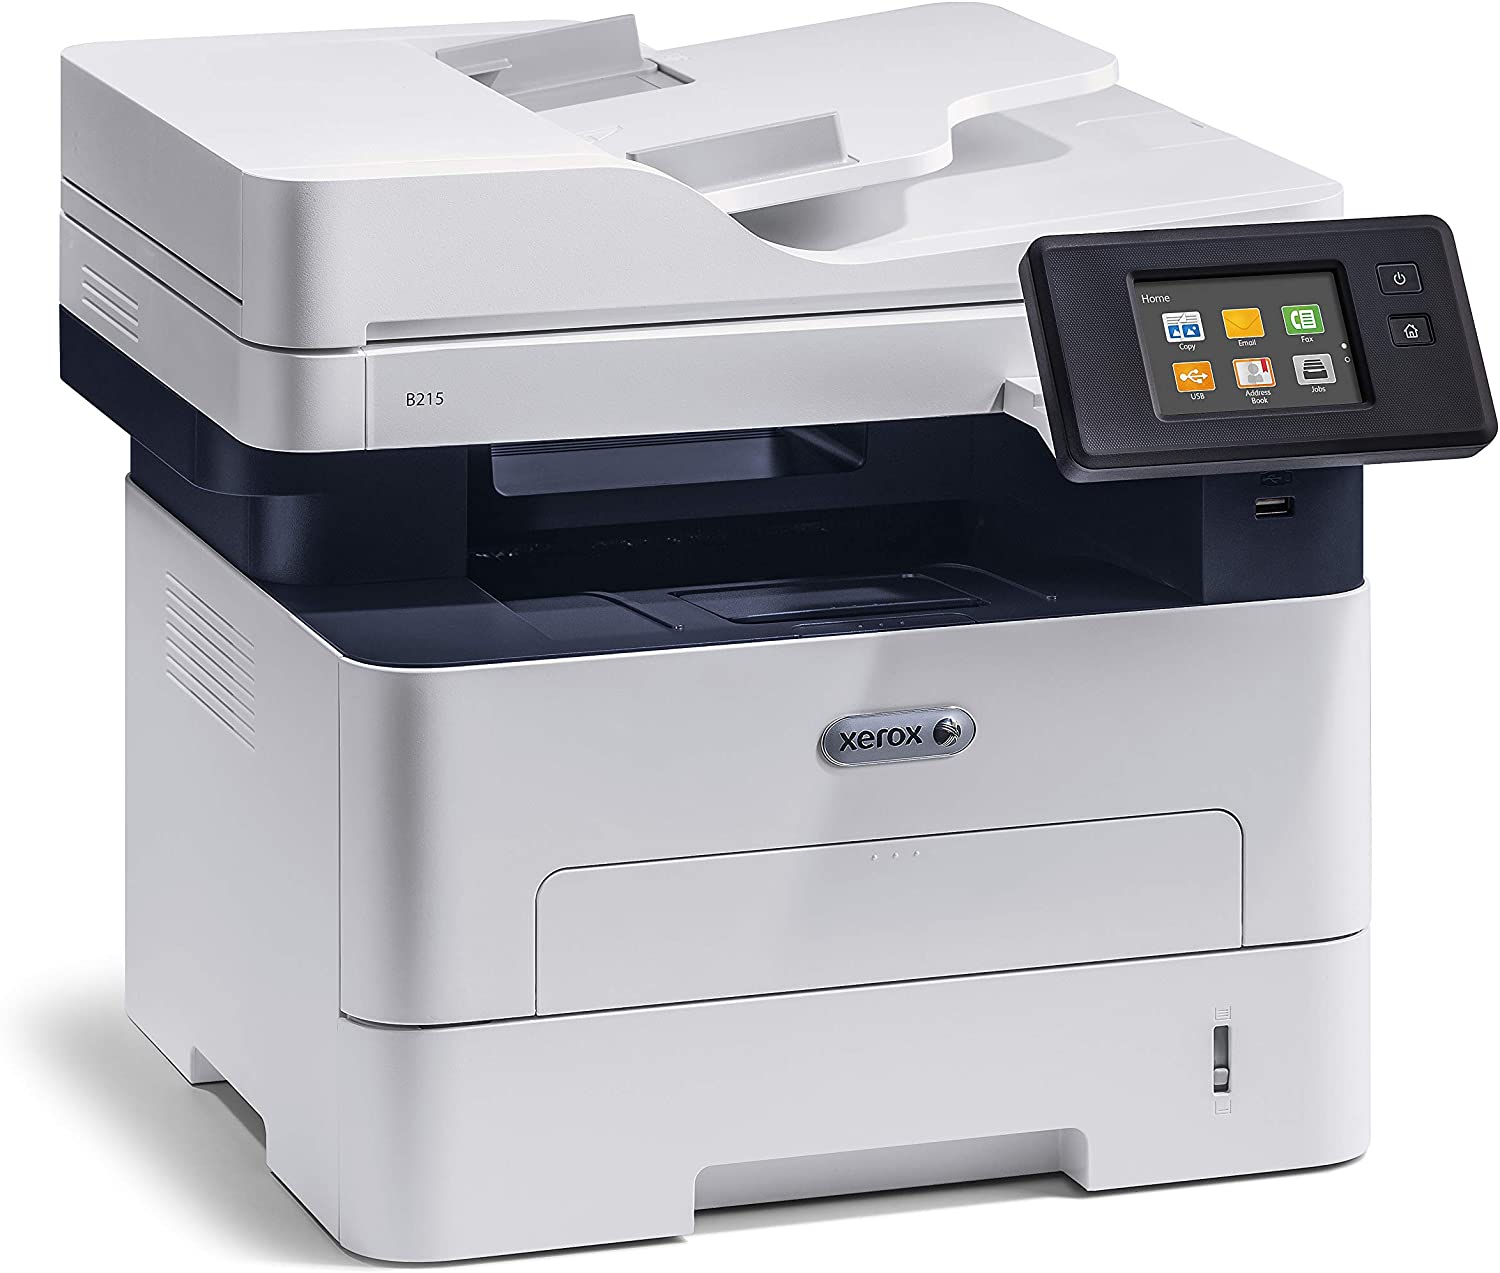 Xerox B215DNI Impresora multifunción monocromática, Amazon Dash Replenishment Ready, Blanco